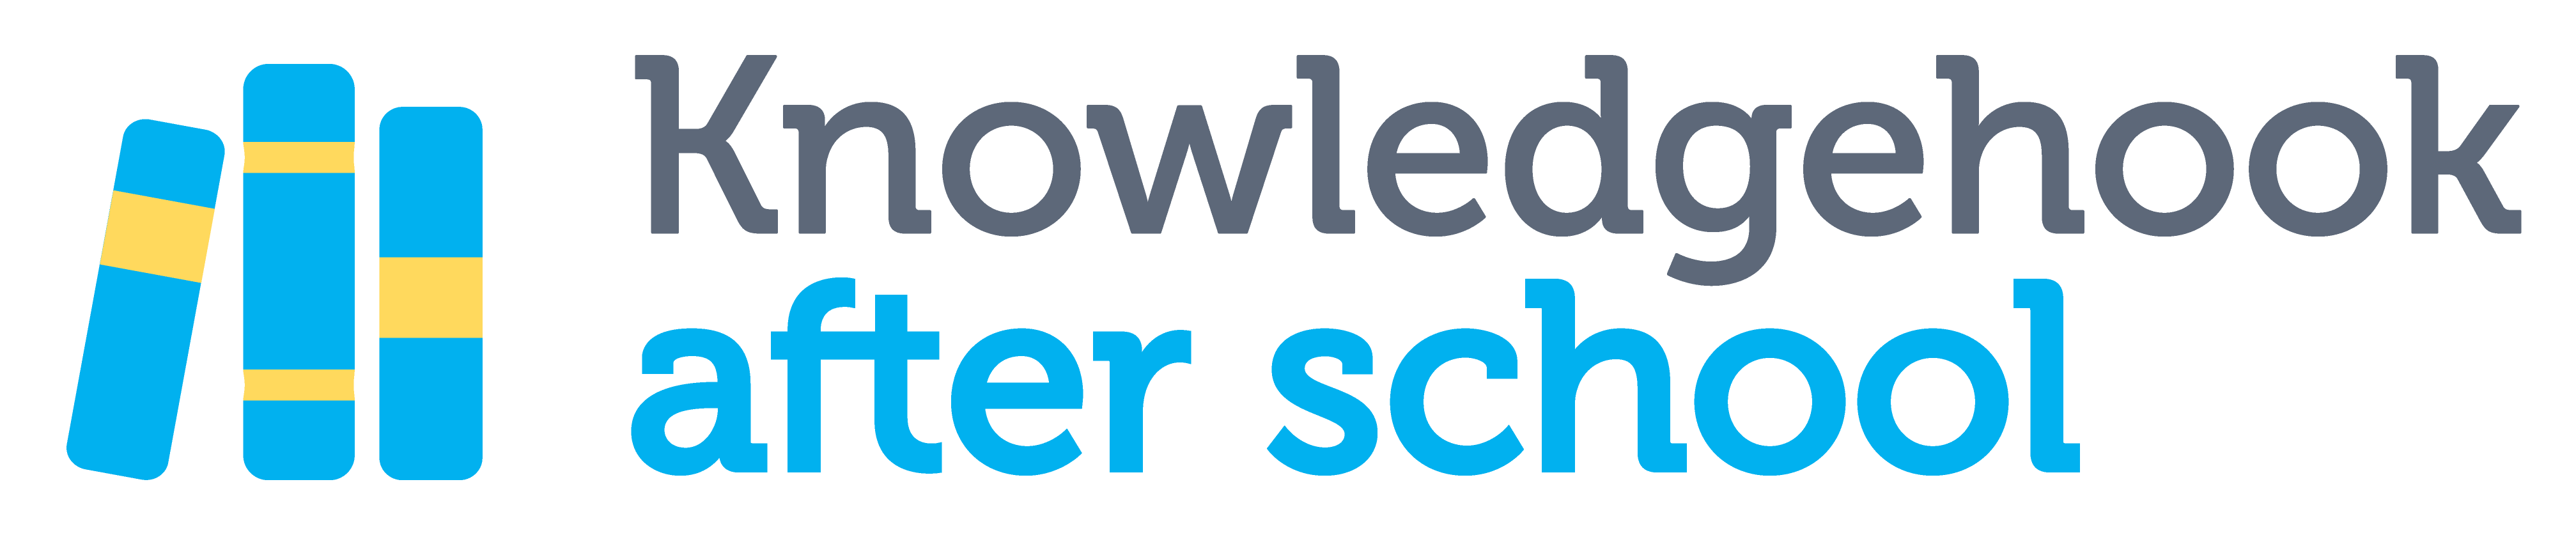 Knowledgehook After School logo